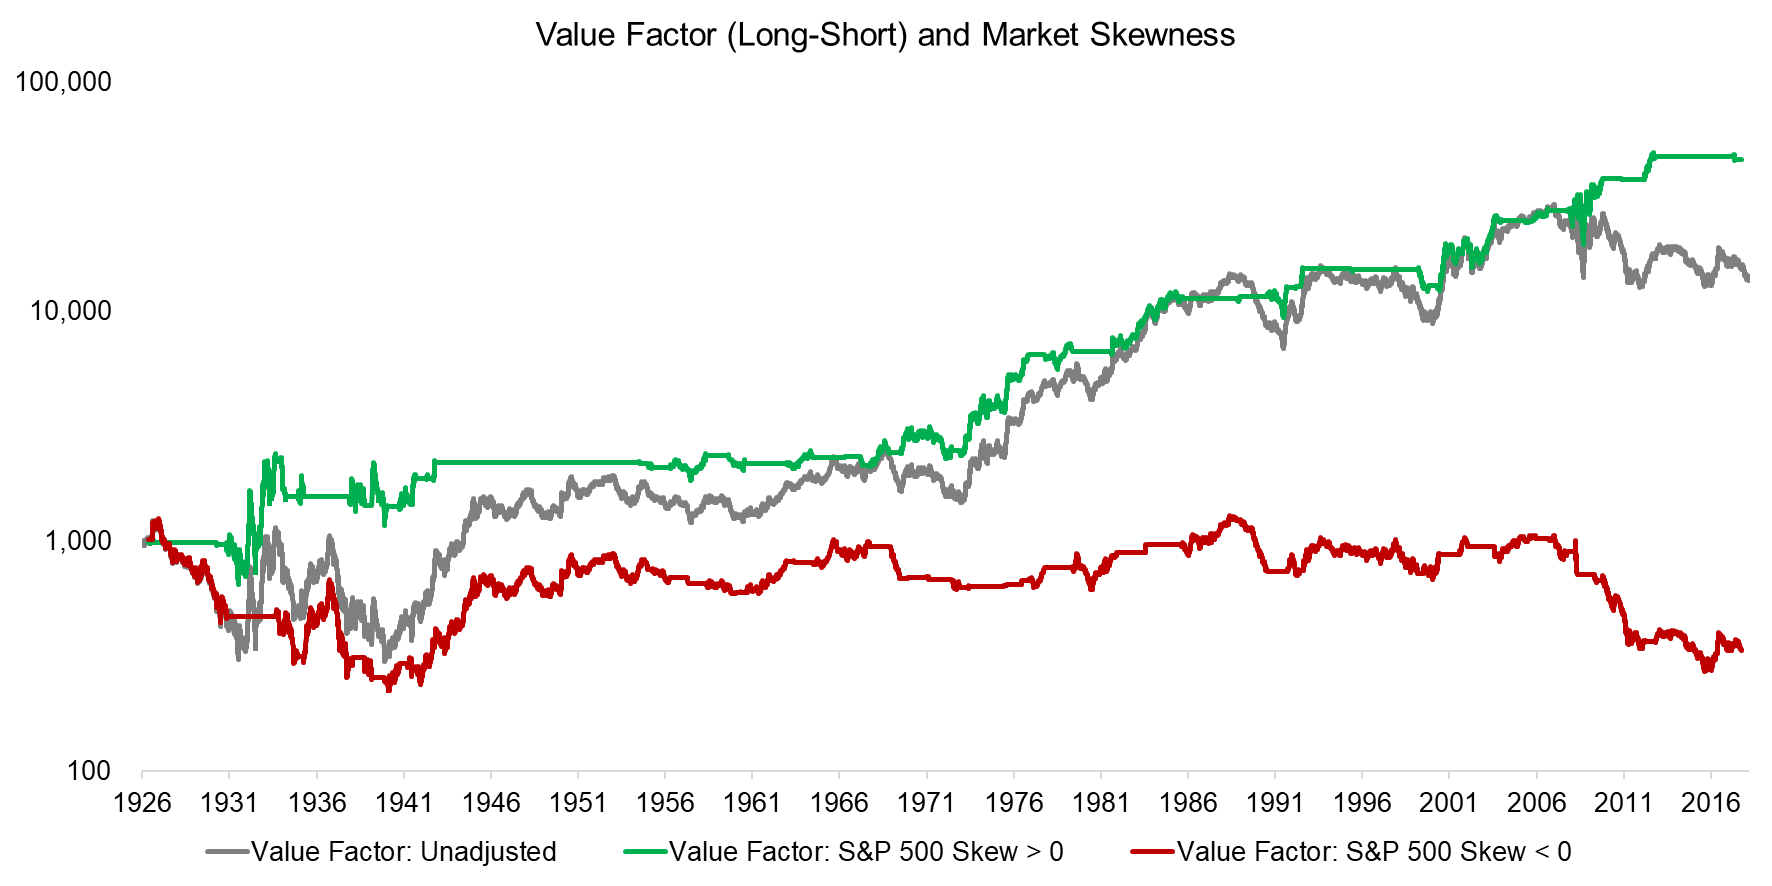 Value Factor (Long-Short) and Market Skewness